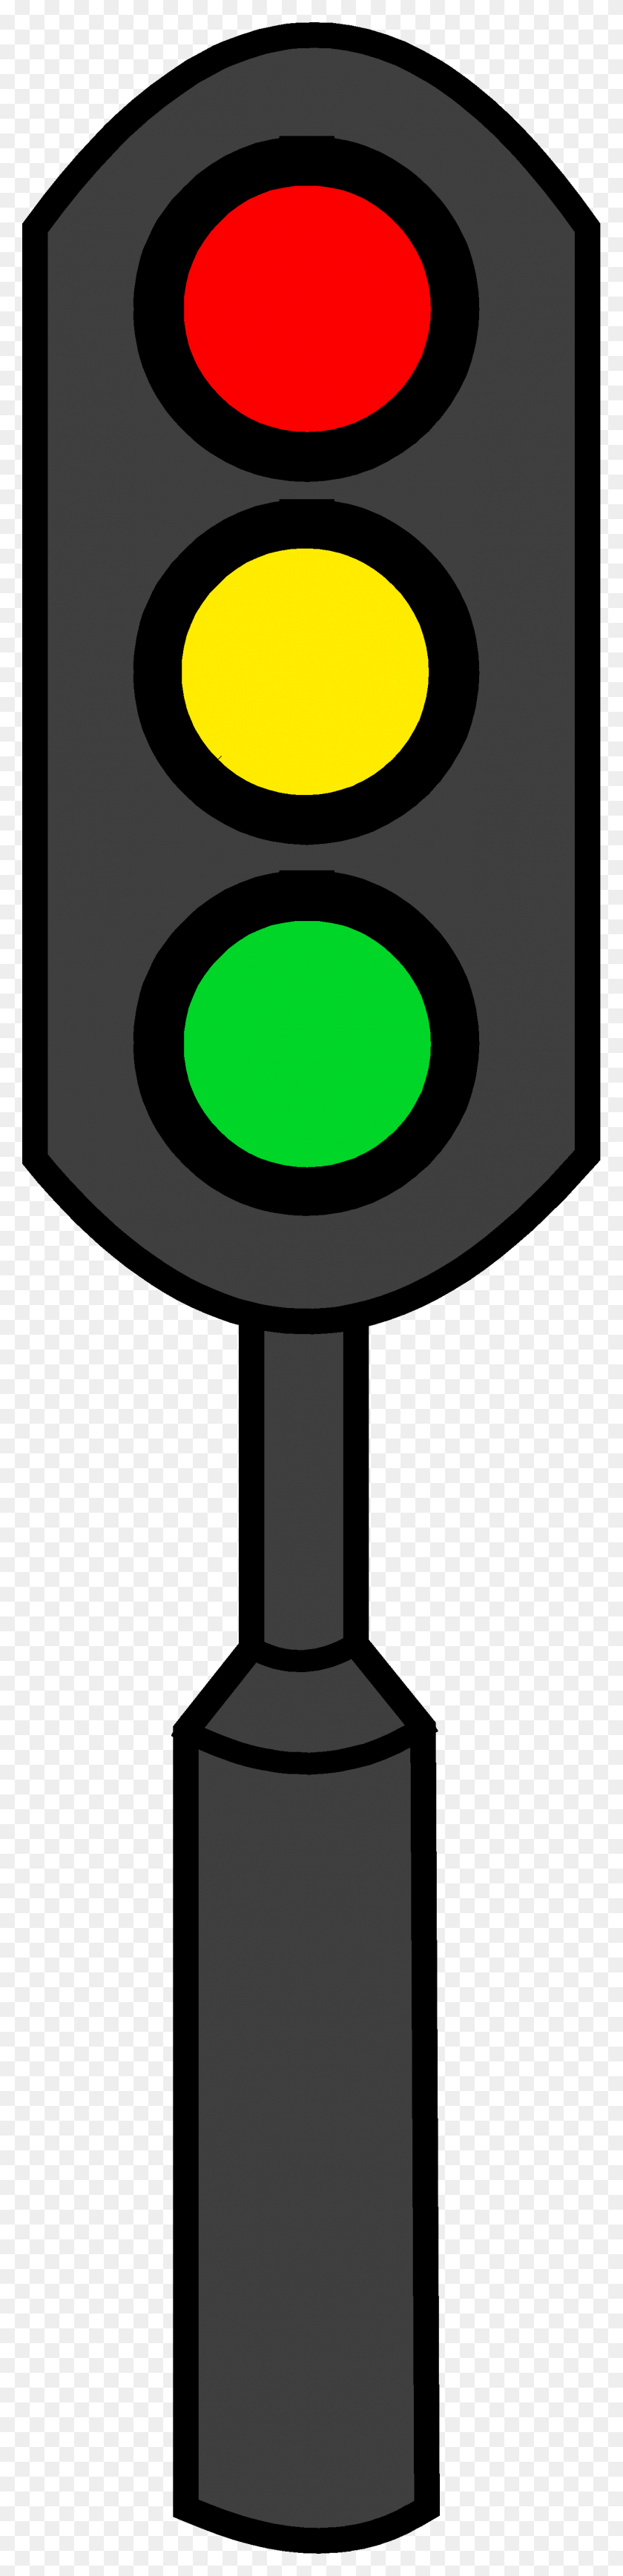 1312x5743 Traffic Light Clipart Look At Traffic Light Clip Art Images - Dahlia Clipart